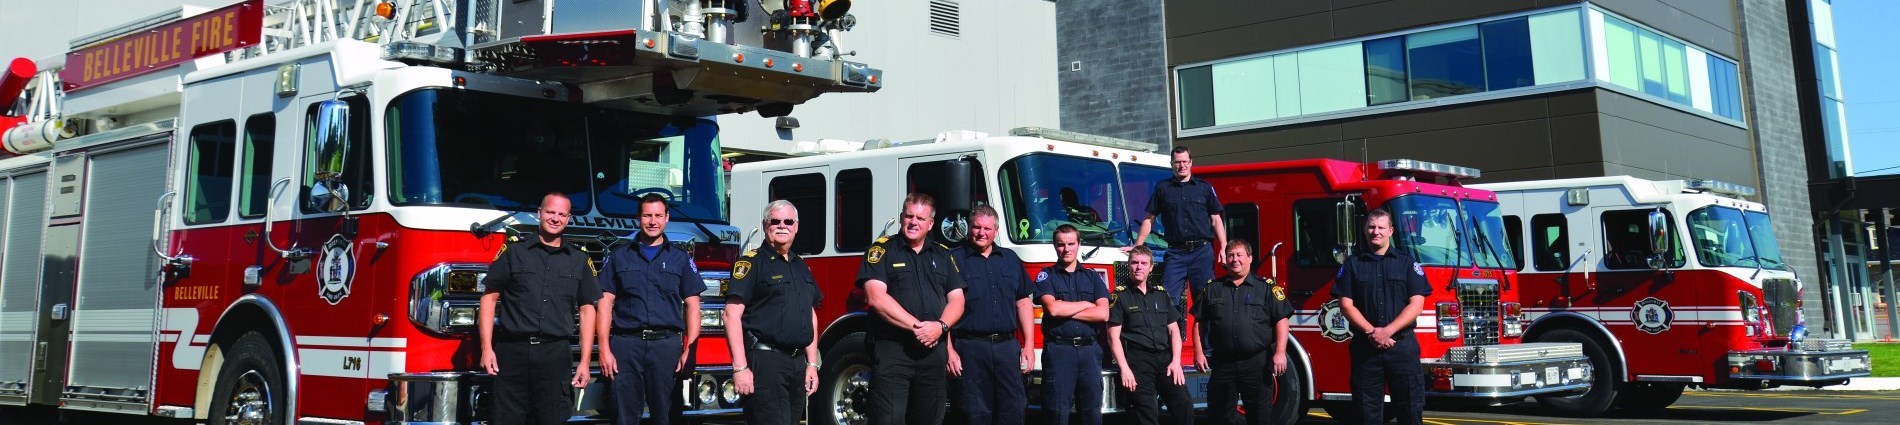 Belleville Fire Department Staff in front of Firetrucks